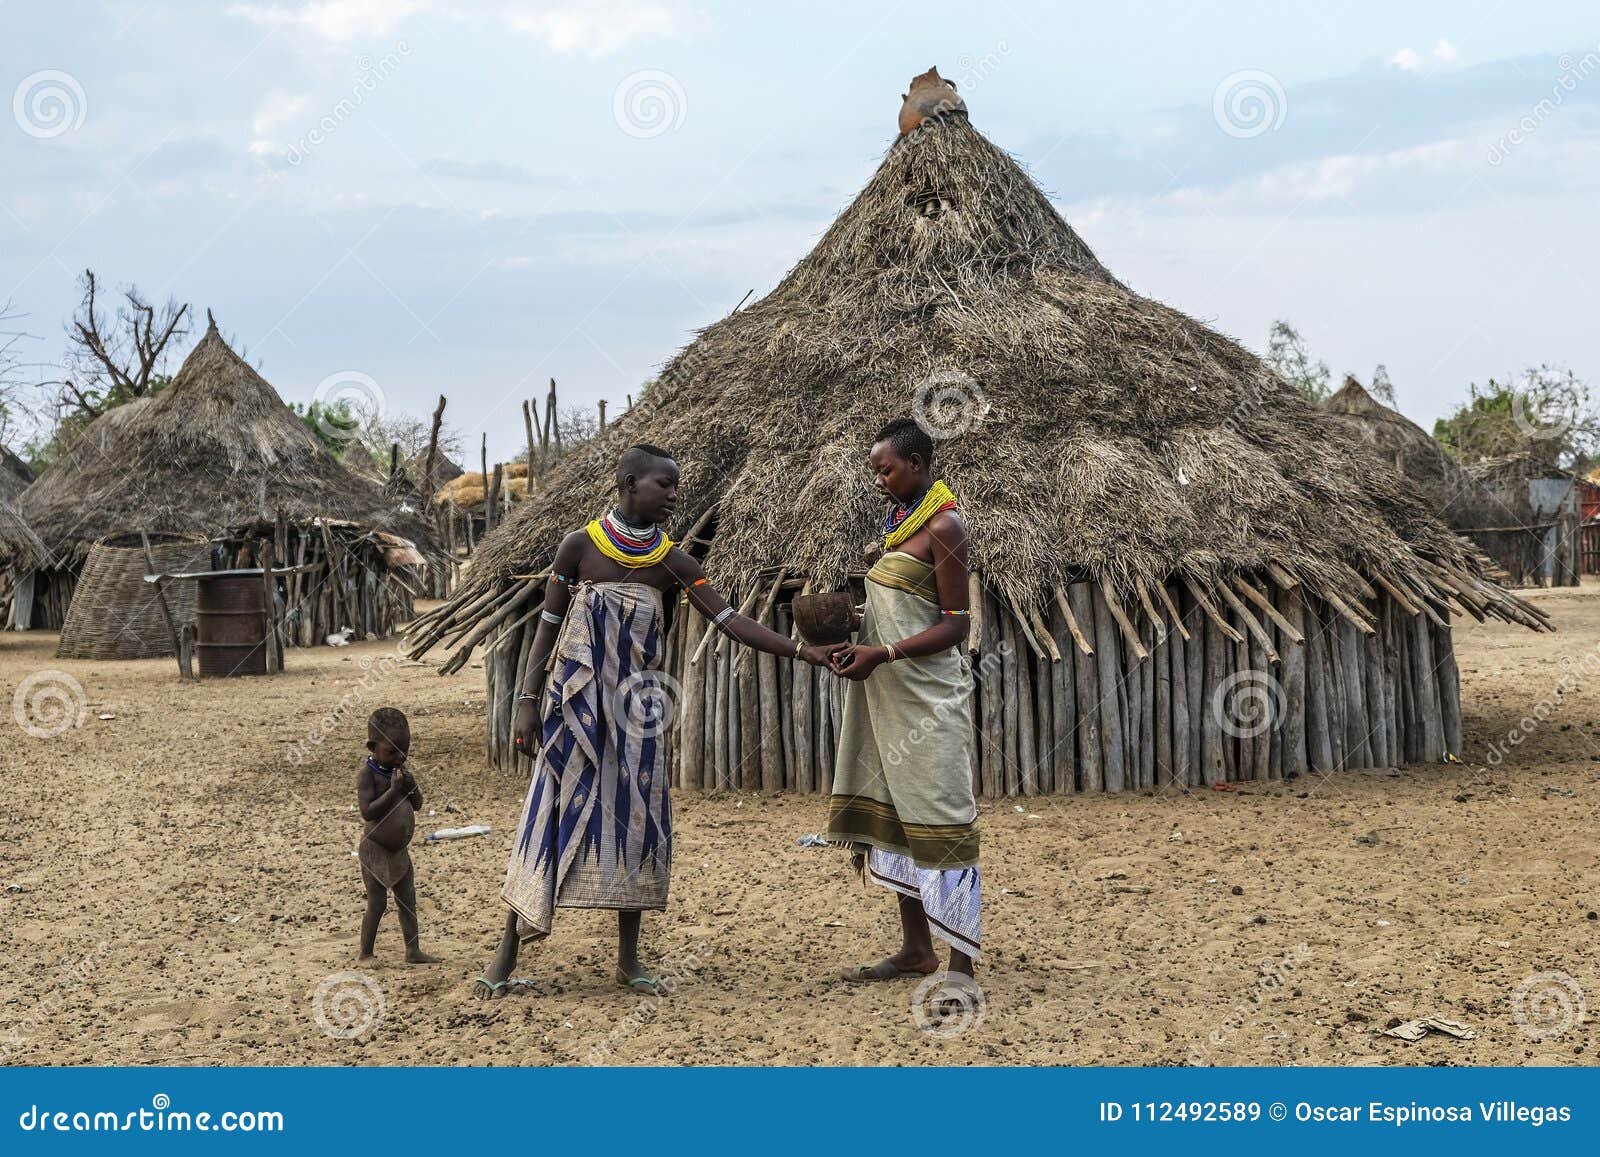 tribu-de-karo-en-el-valle-omo-etiop%C3%ADa-112492589.jpg